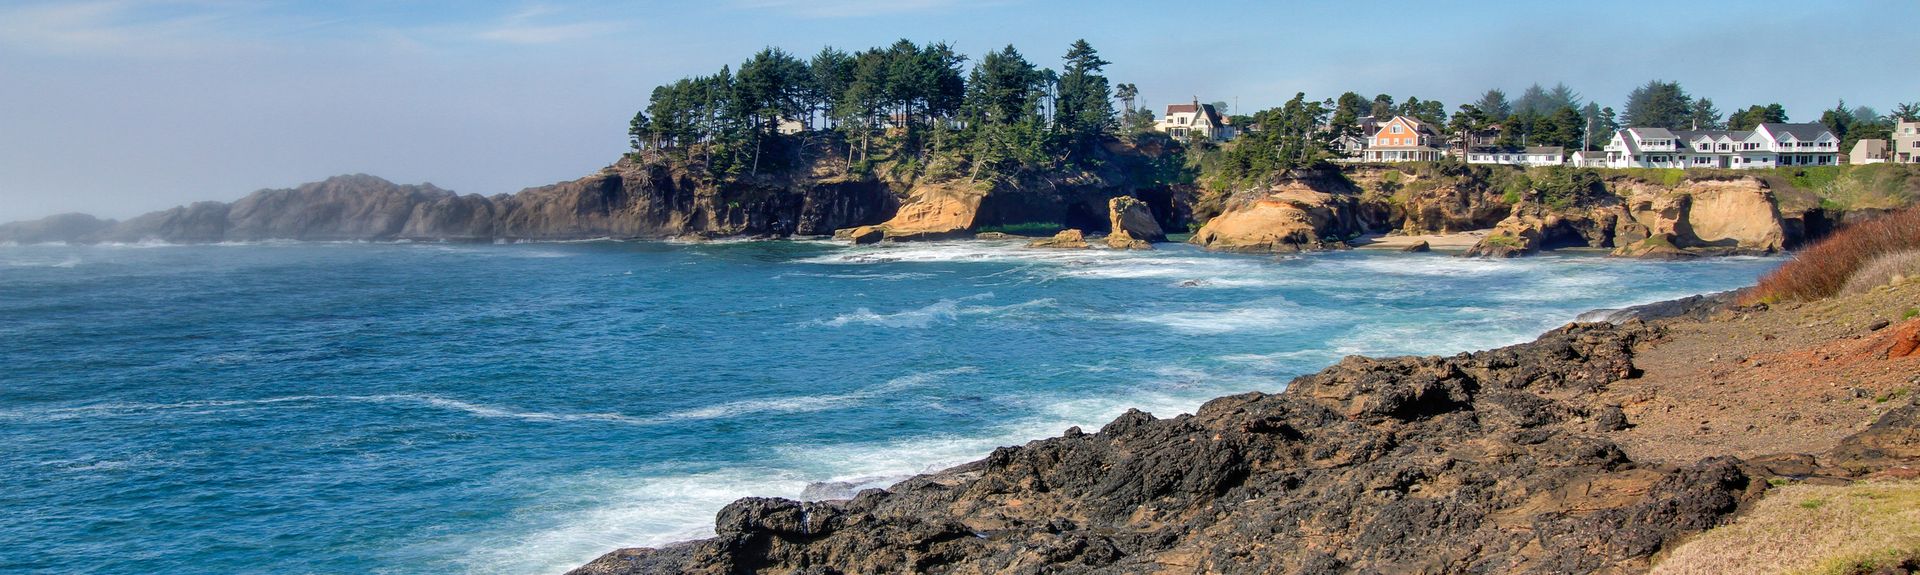 Oregon Undersea Gardens Newport Vacation Rentals Houses More